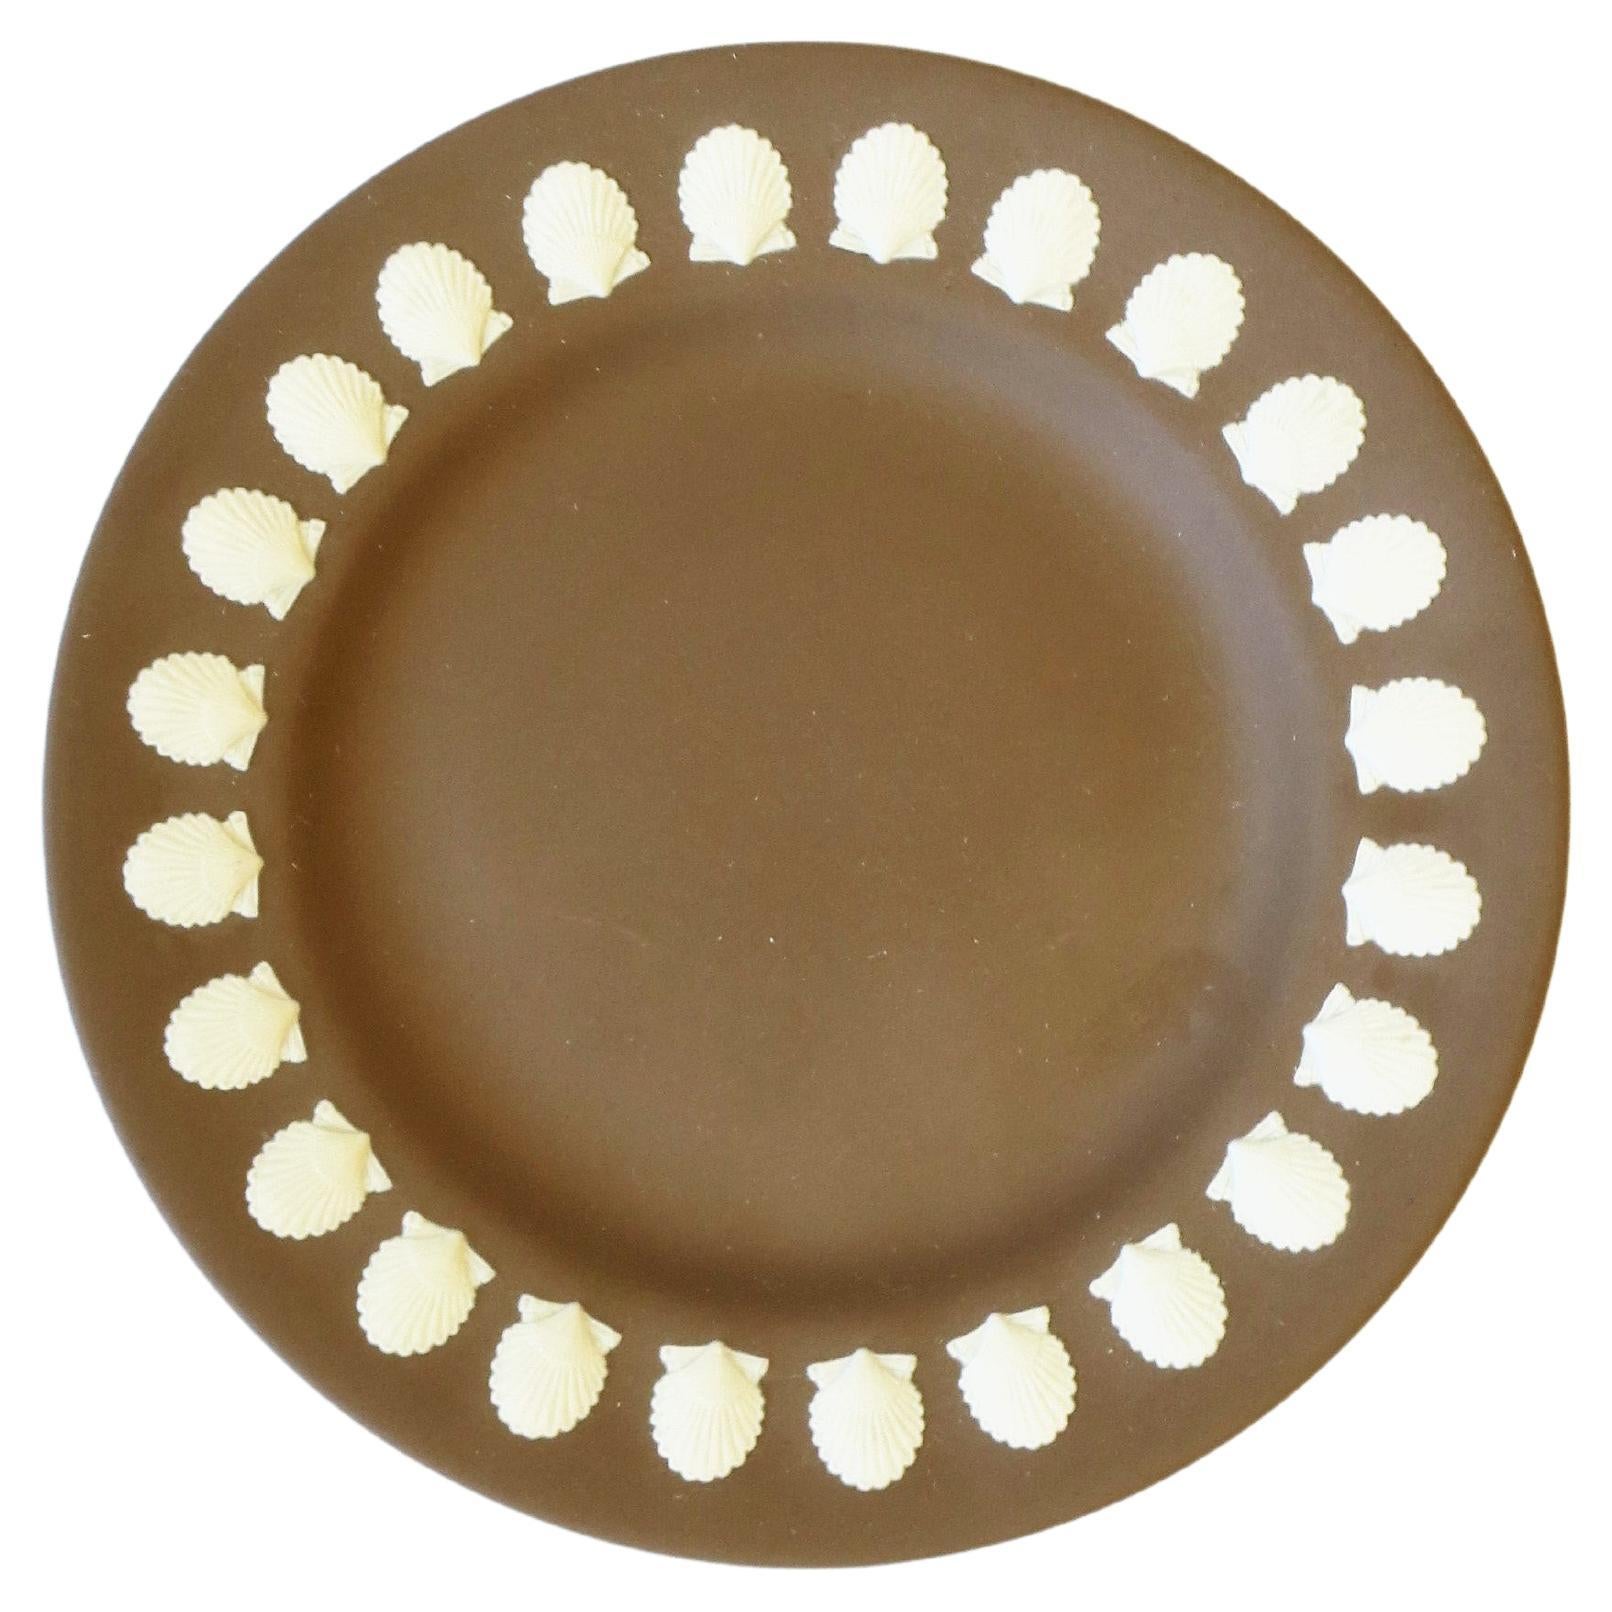 Wedgwood Jasperware Dish with Scallop Seashell Design